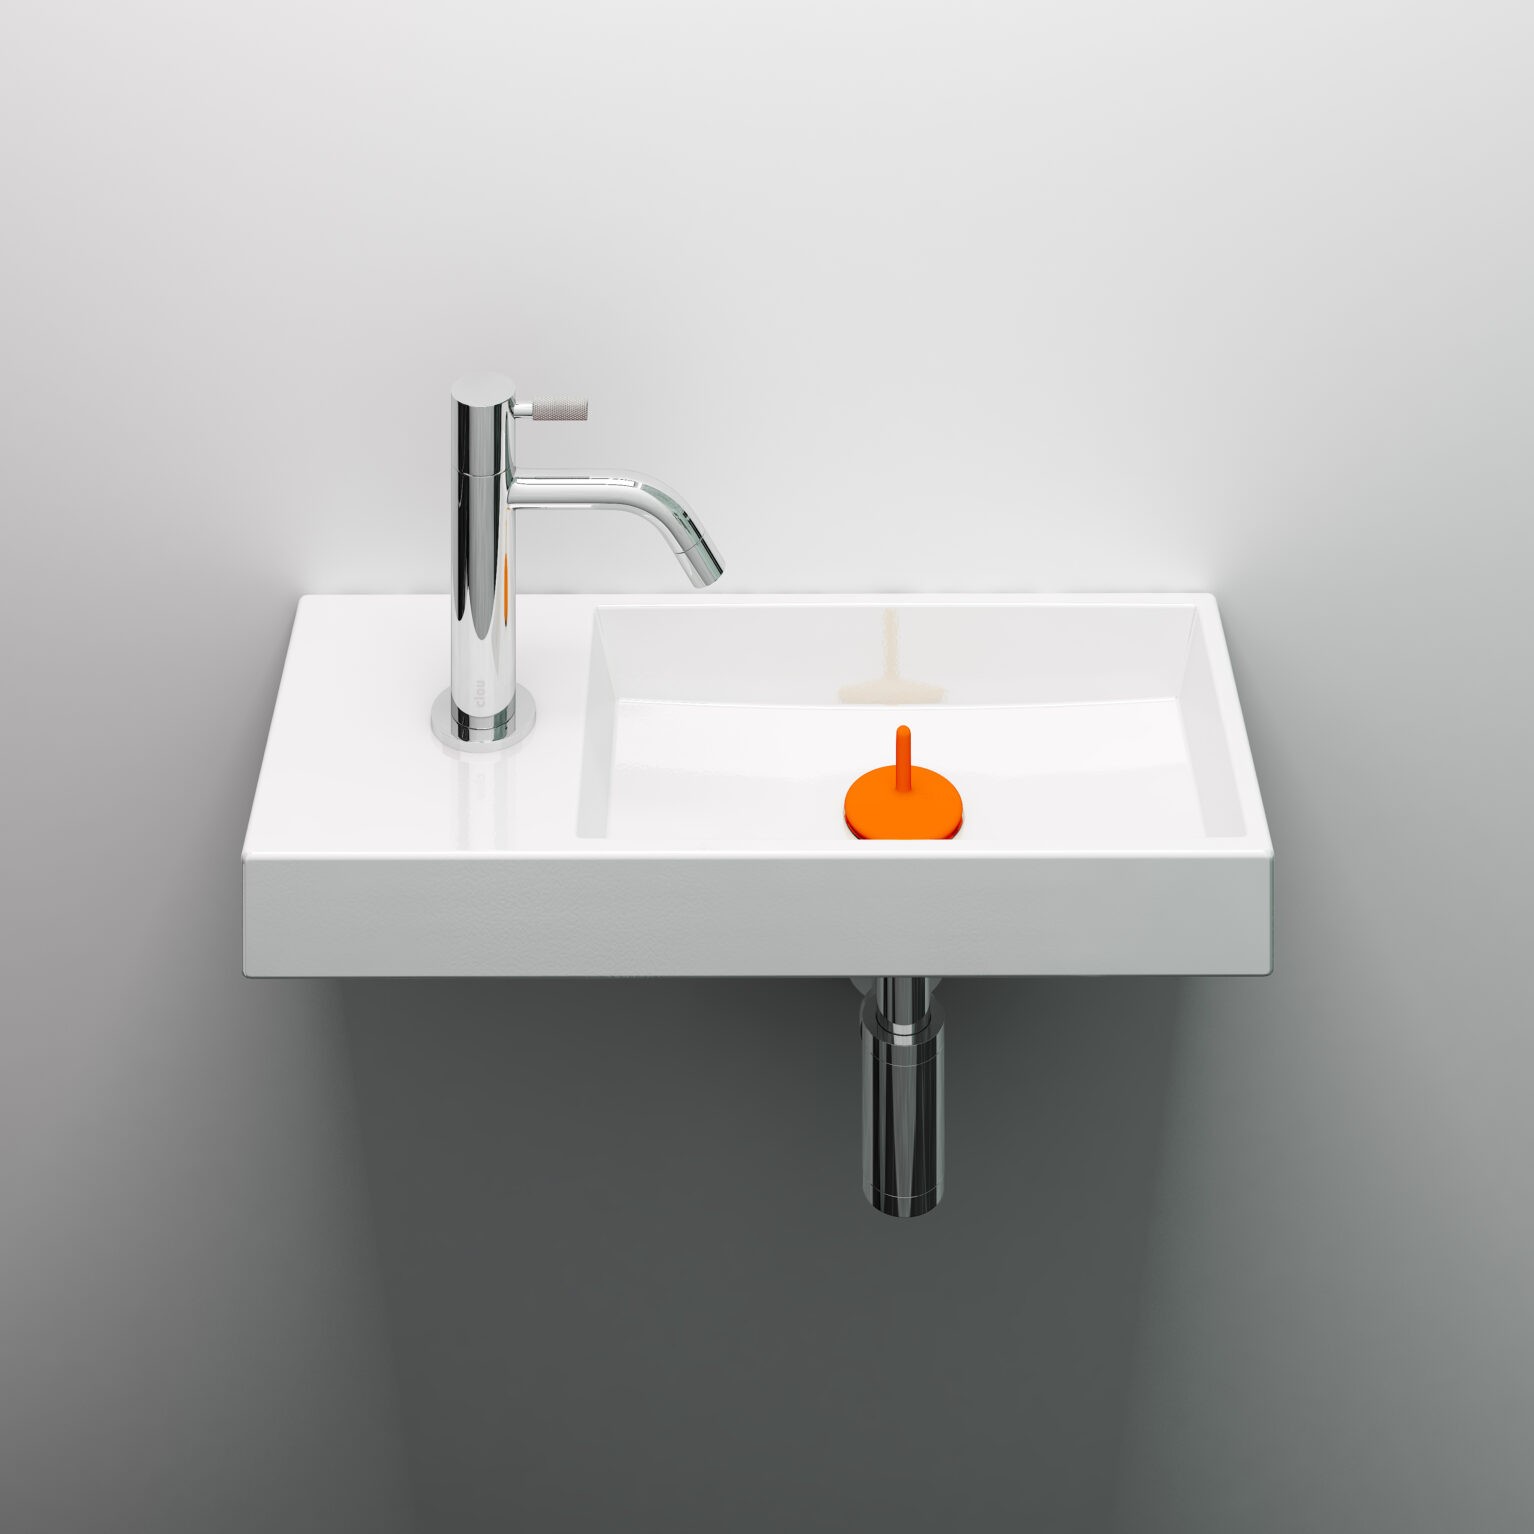 Wash-Me-fontein-siliconen-waterstop-oranje-sifon-koudwaterkraan-Freddo-badkamer-luxe-sanitair-clou-CL0655025